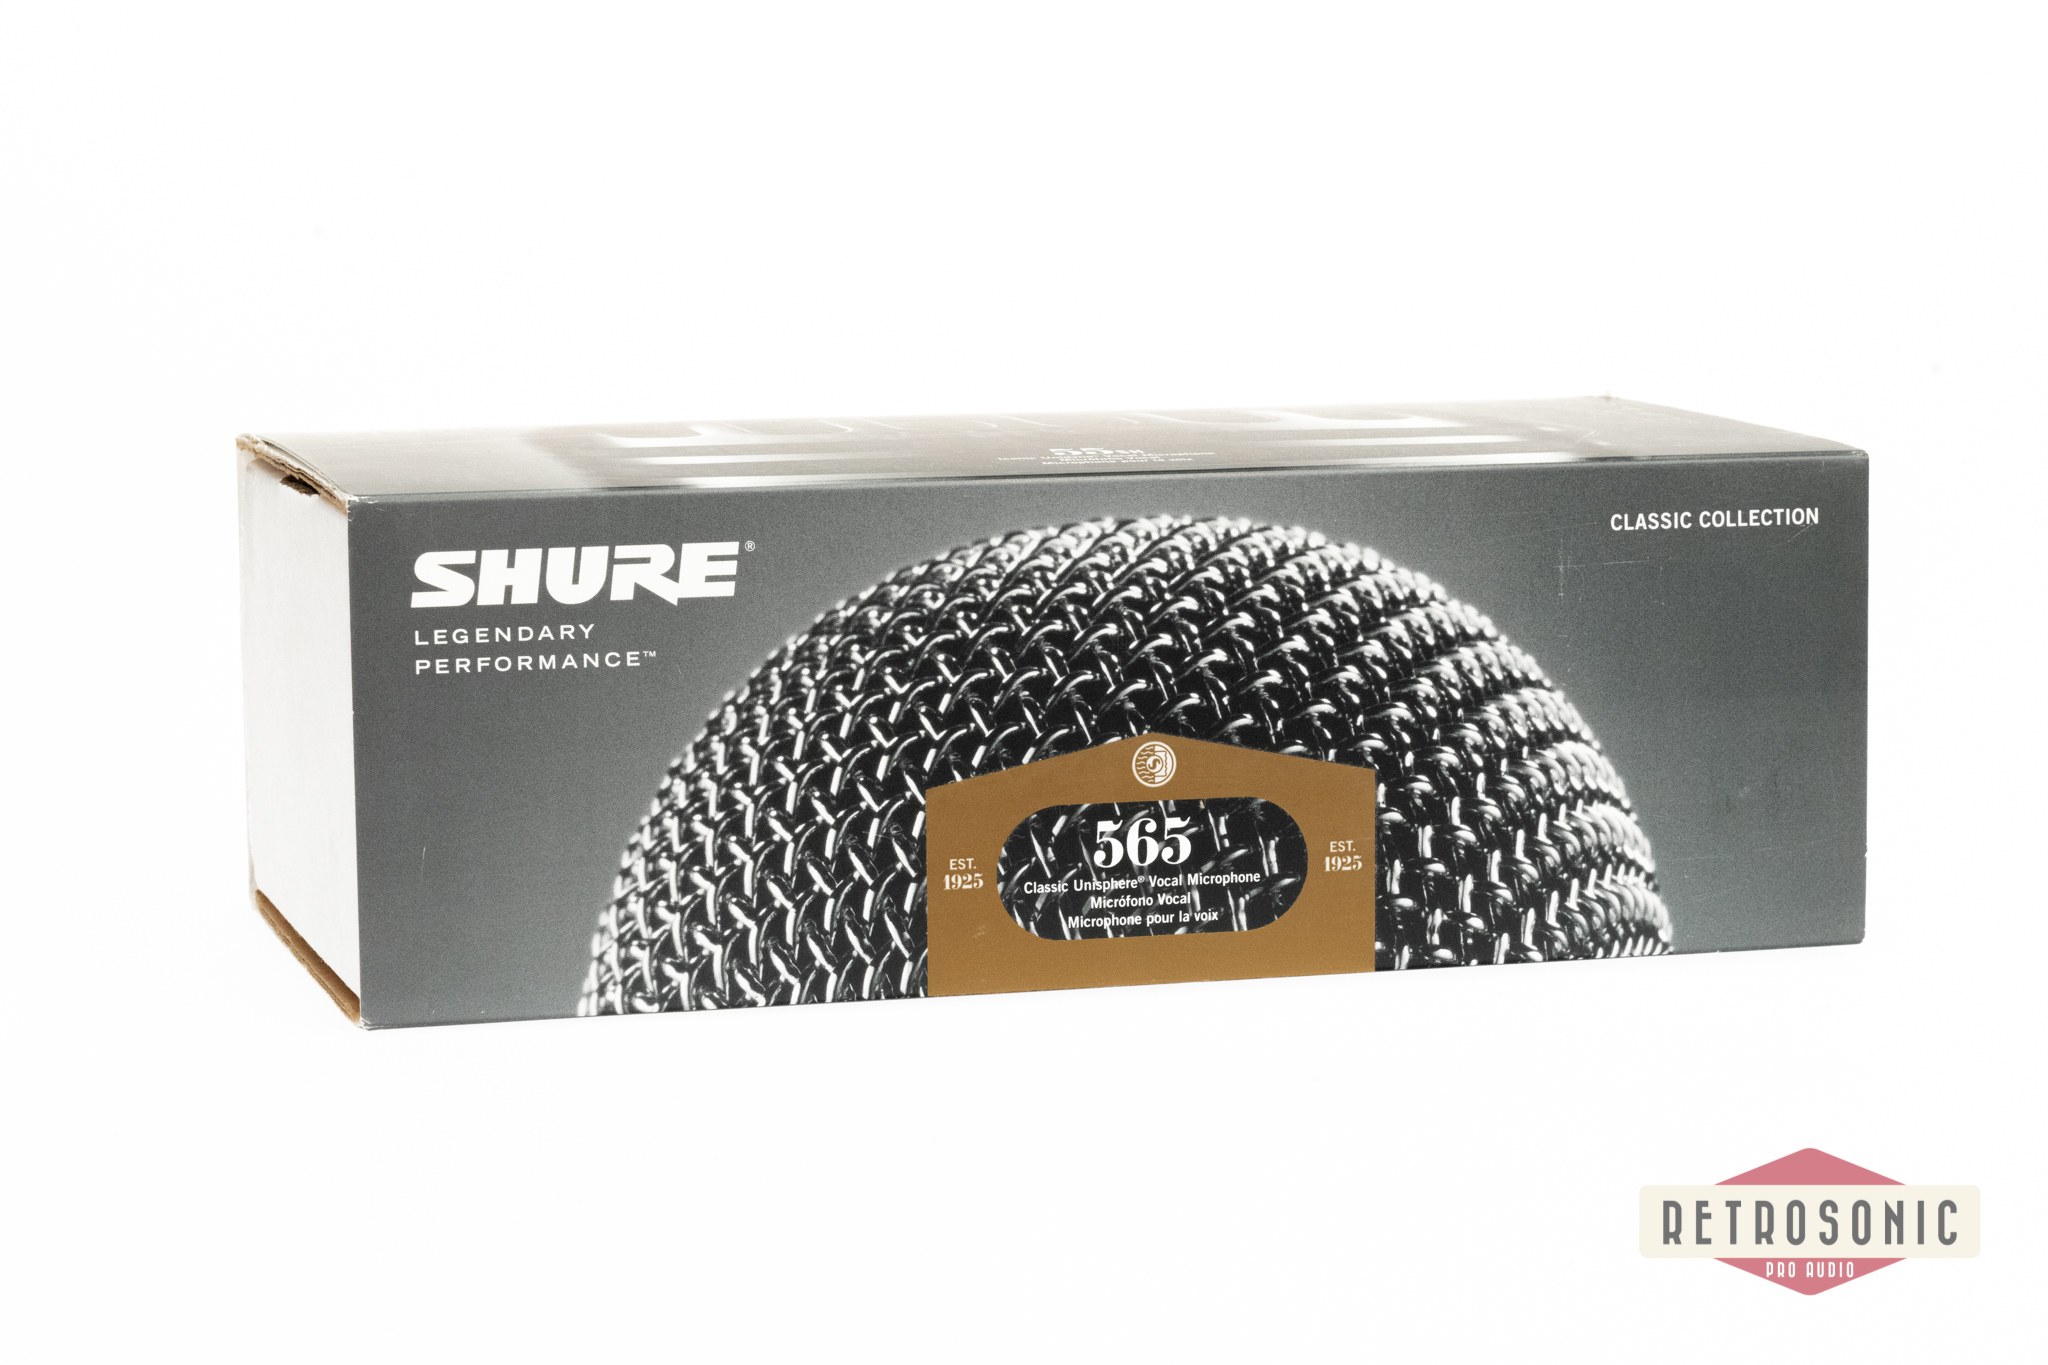 Shure 520DX Harmonica Microphone